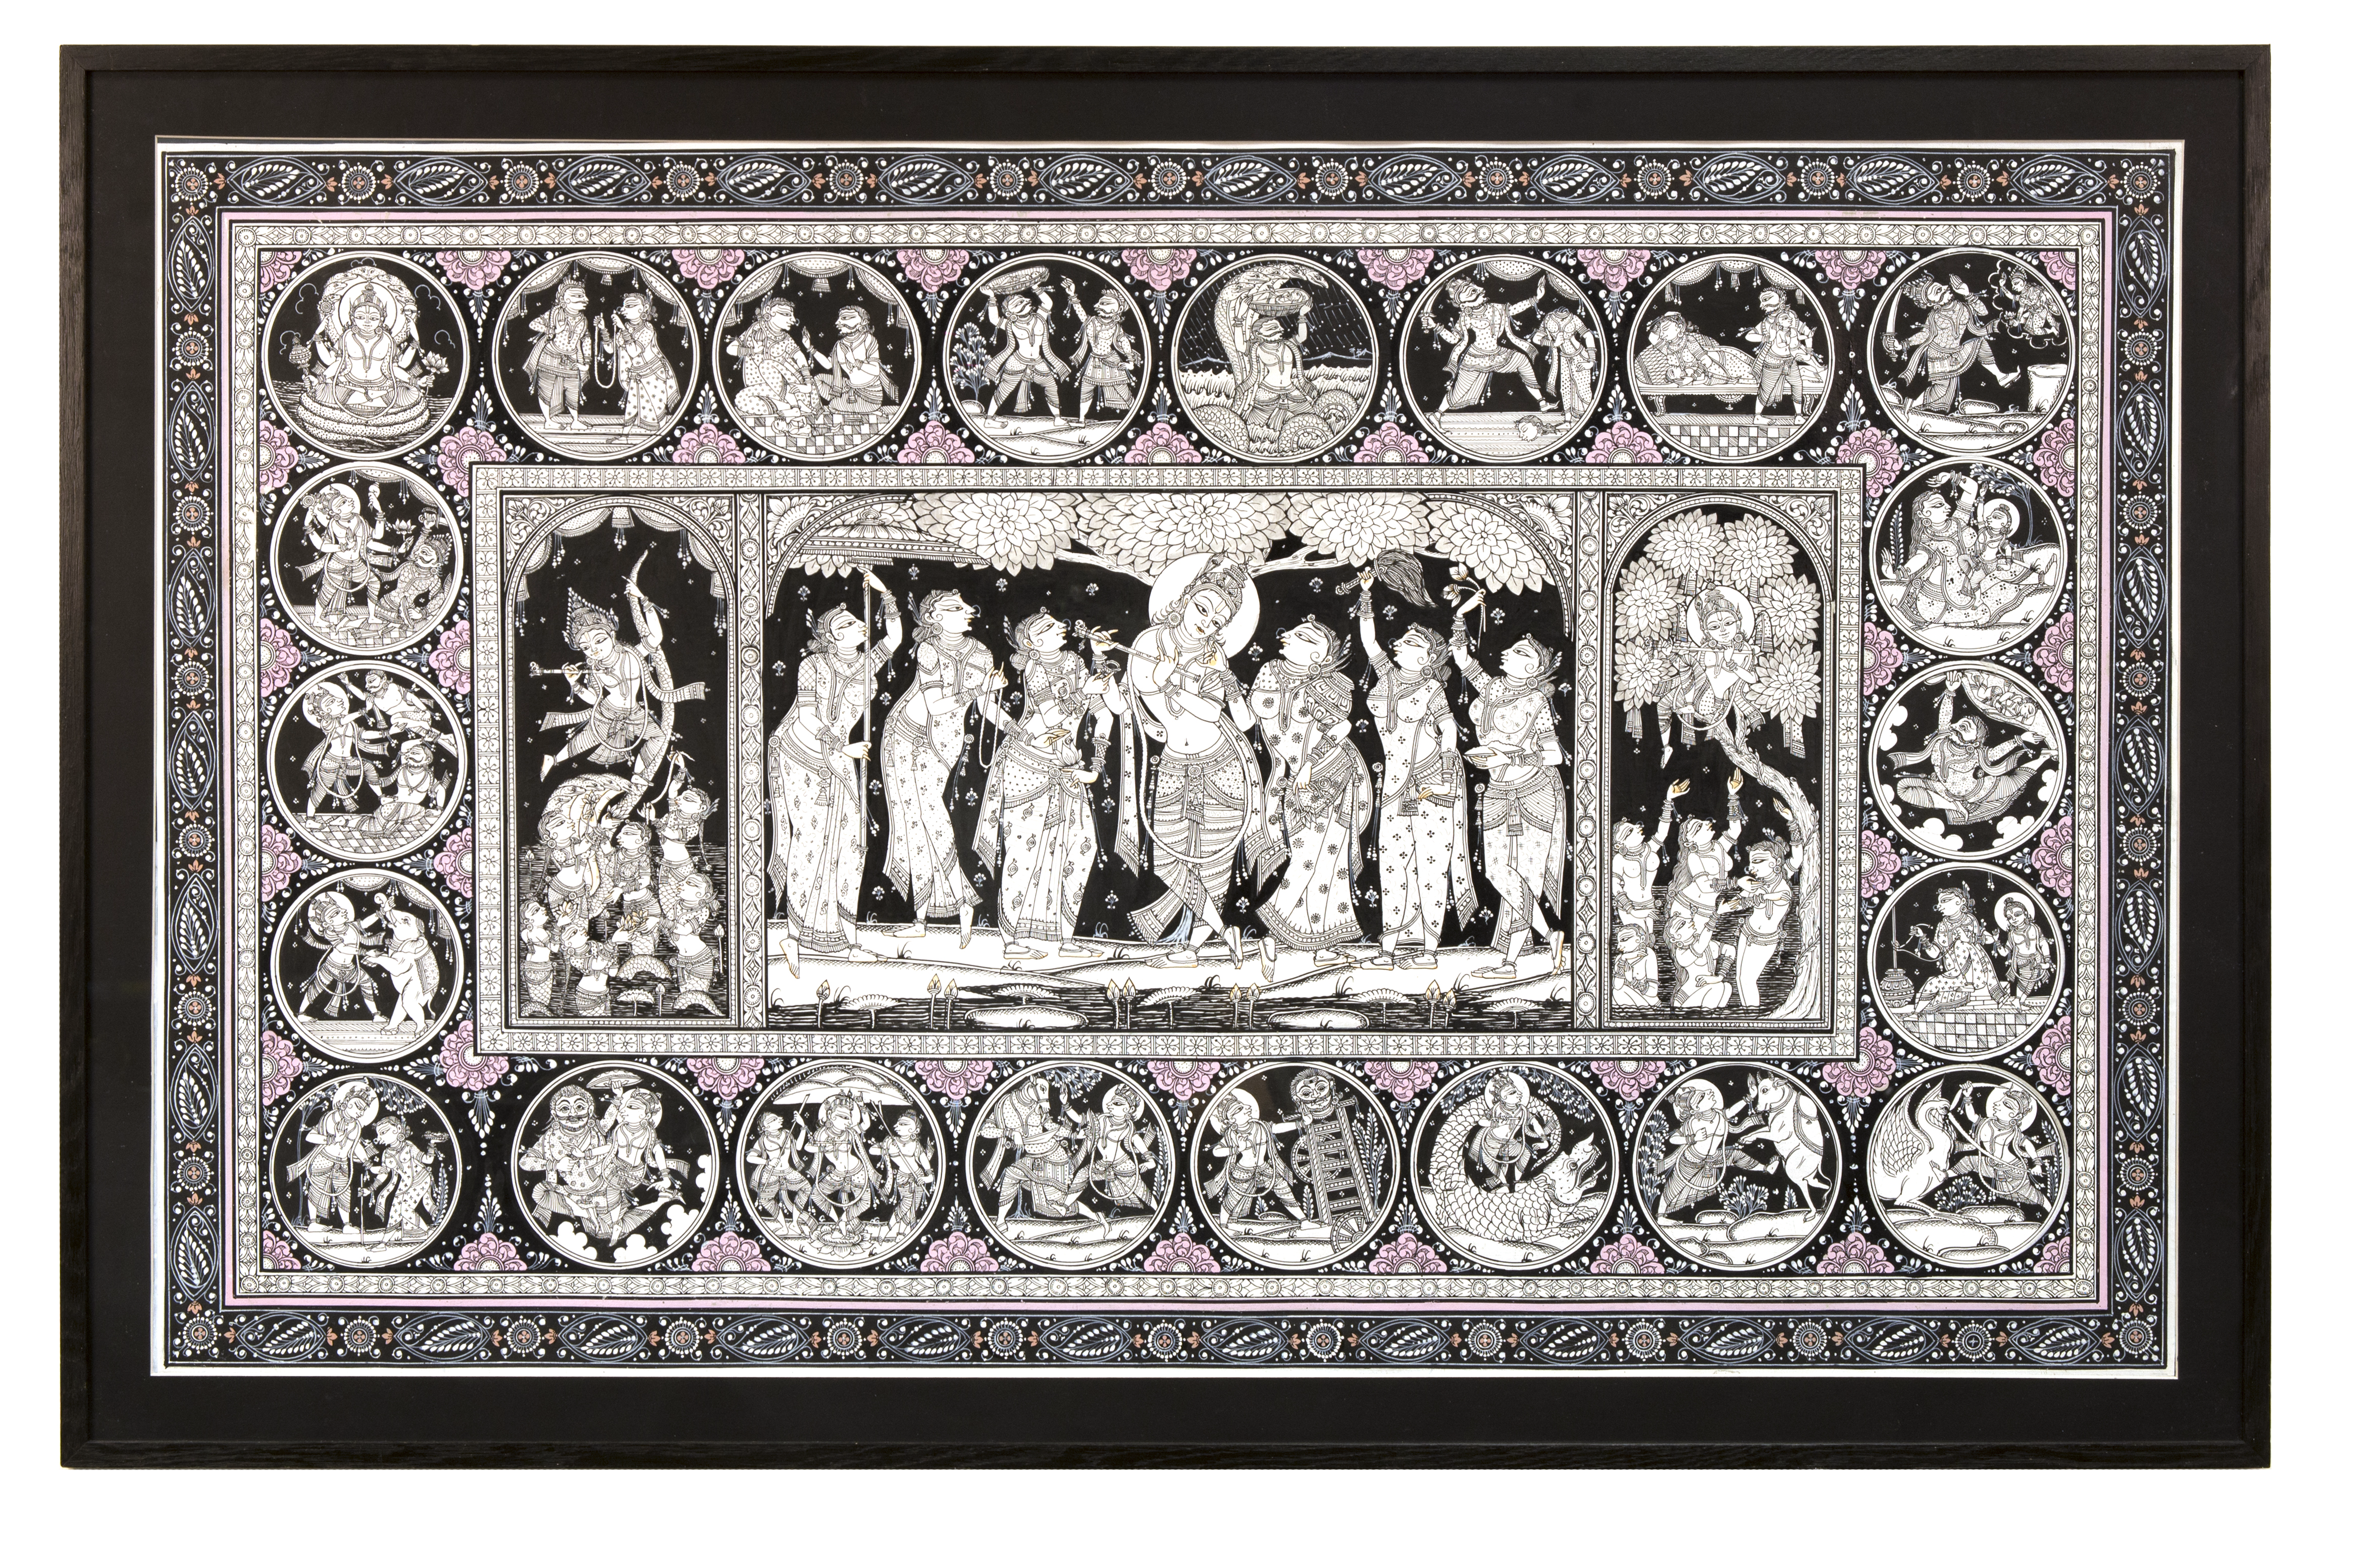 Pranab N Das, Oriya Pattachitra - Krishna and the Gopis, 2018, 71 x 112cm